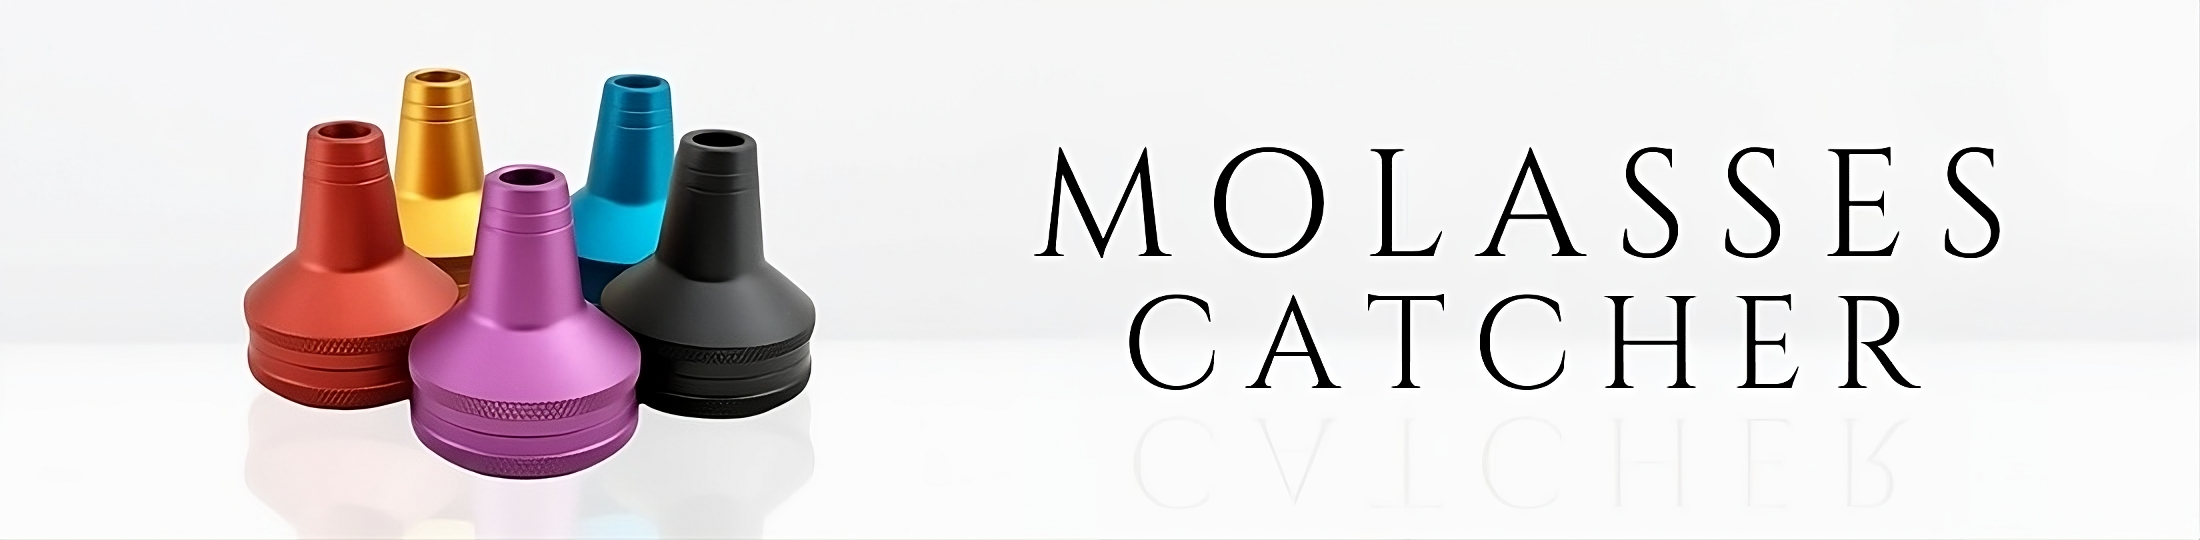 Molasses Catcher Collection